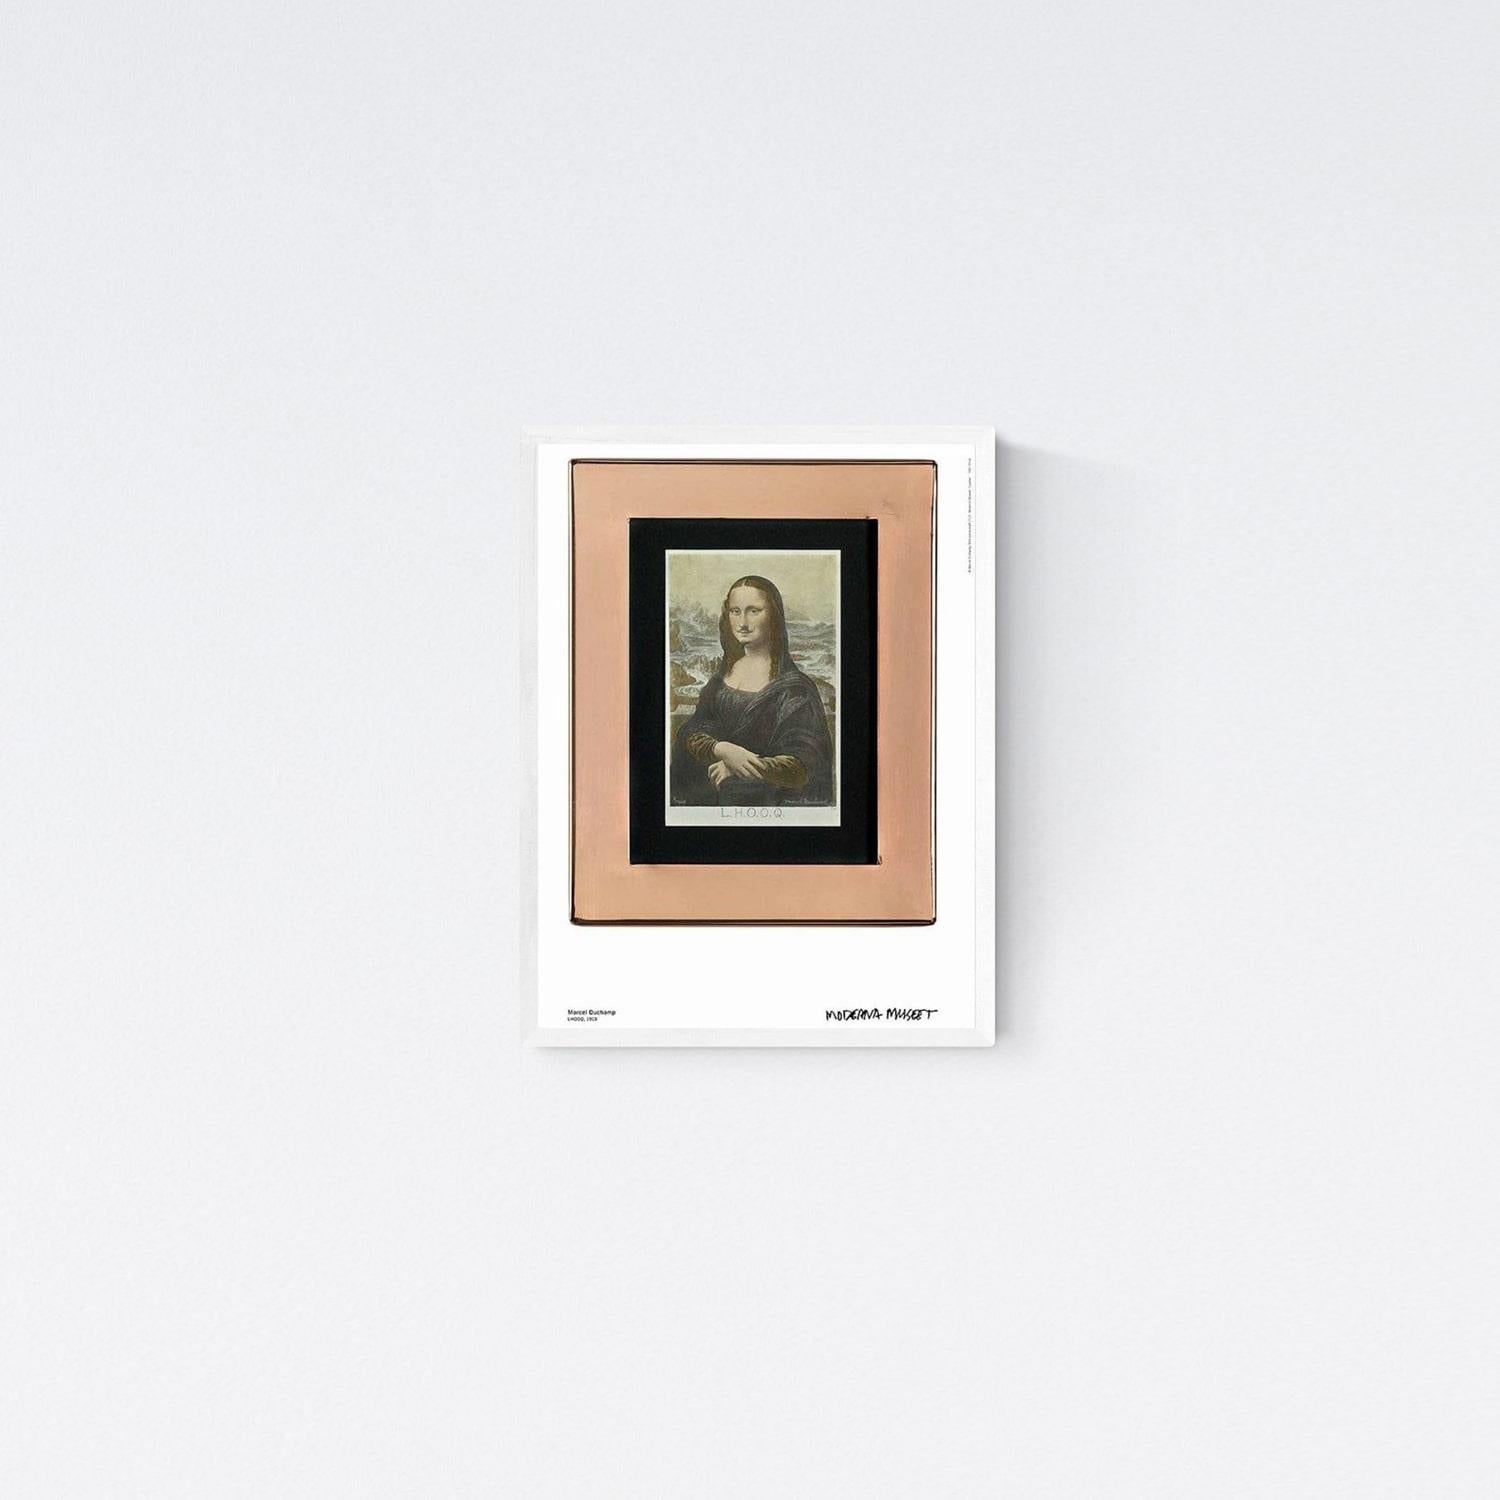 LHOOQ, Small Museum Poster, Surrealist, Humor, Mona Lisa - Print by (after) Marcel Duchamp